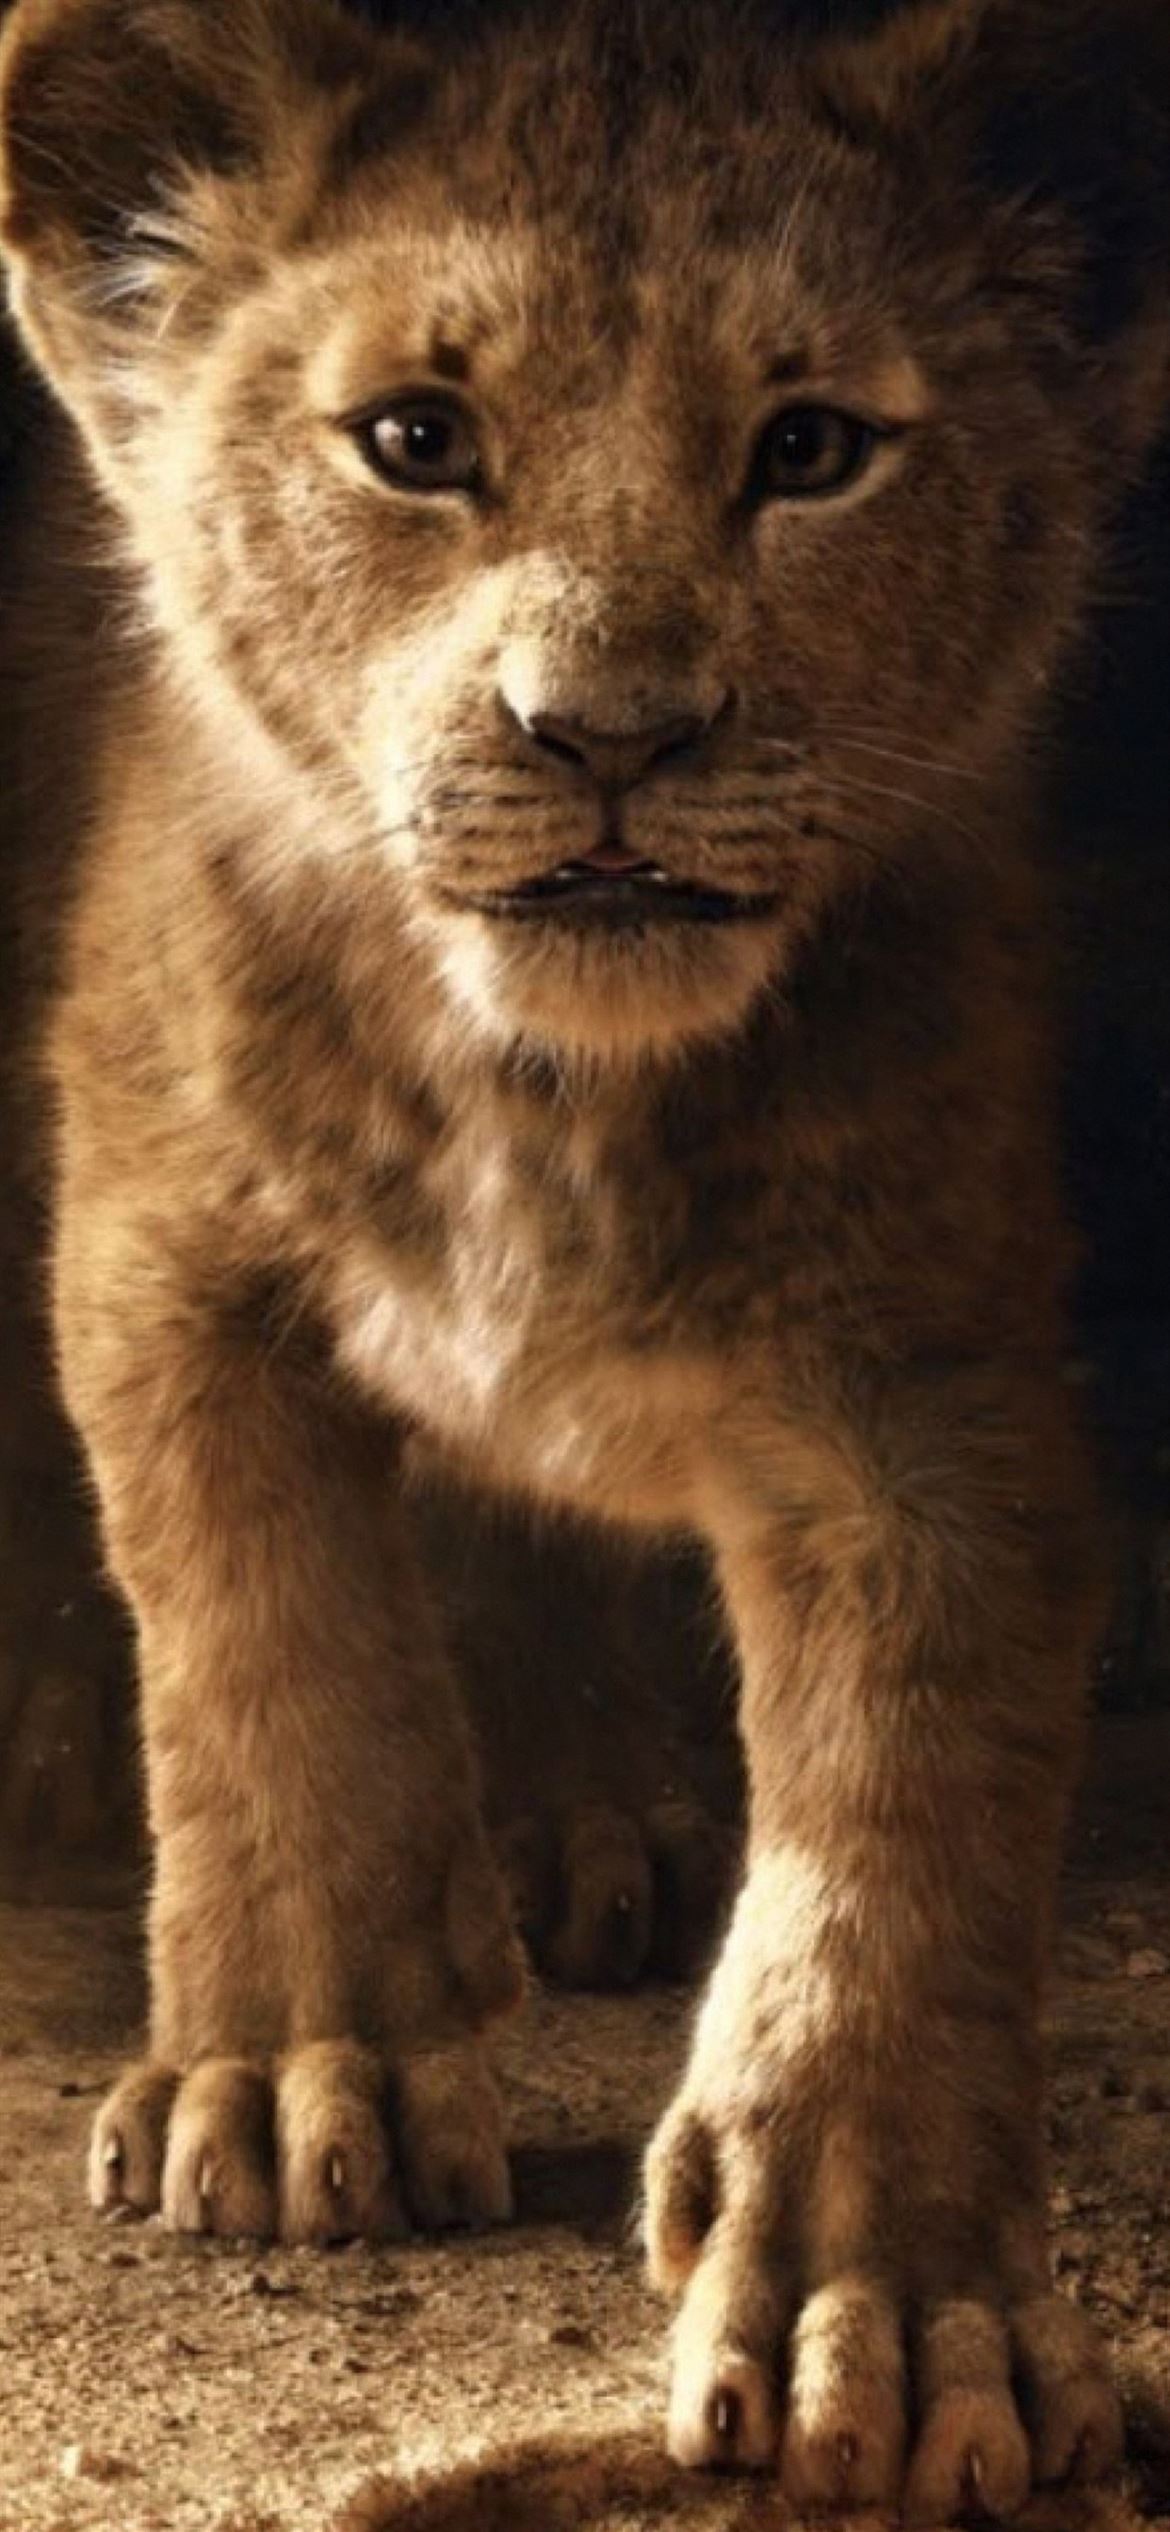 The Lion King Simba 4k iPhone Wallpaper